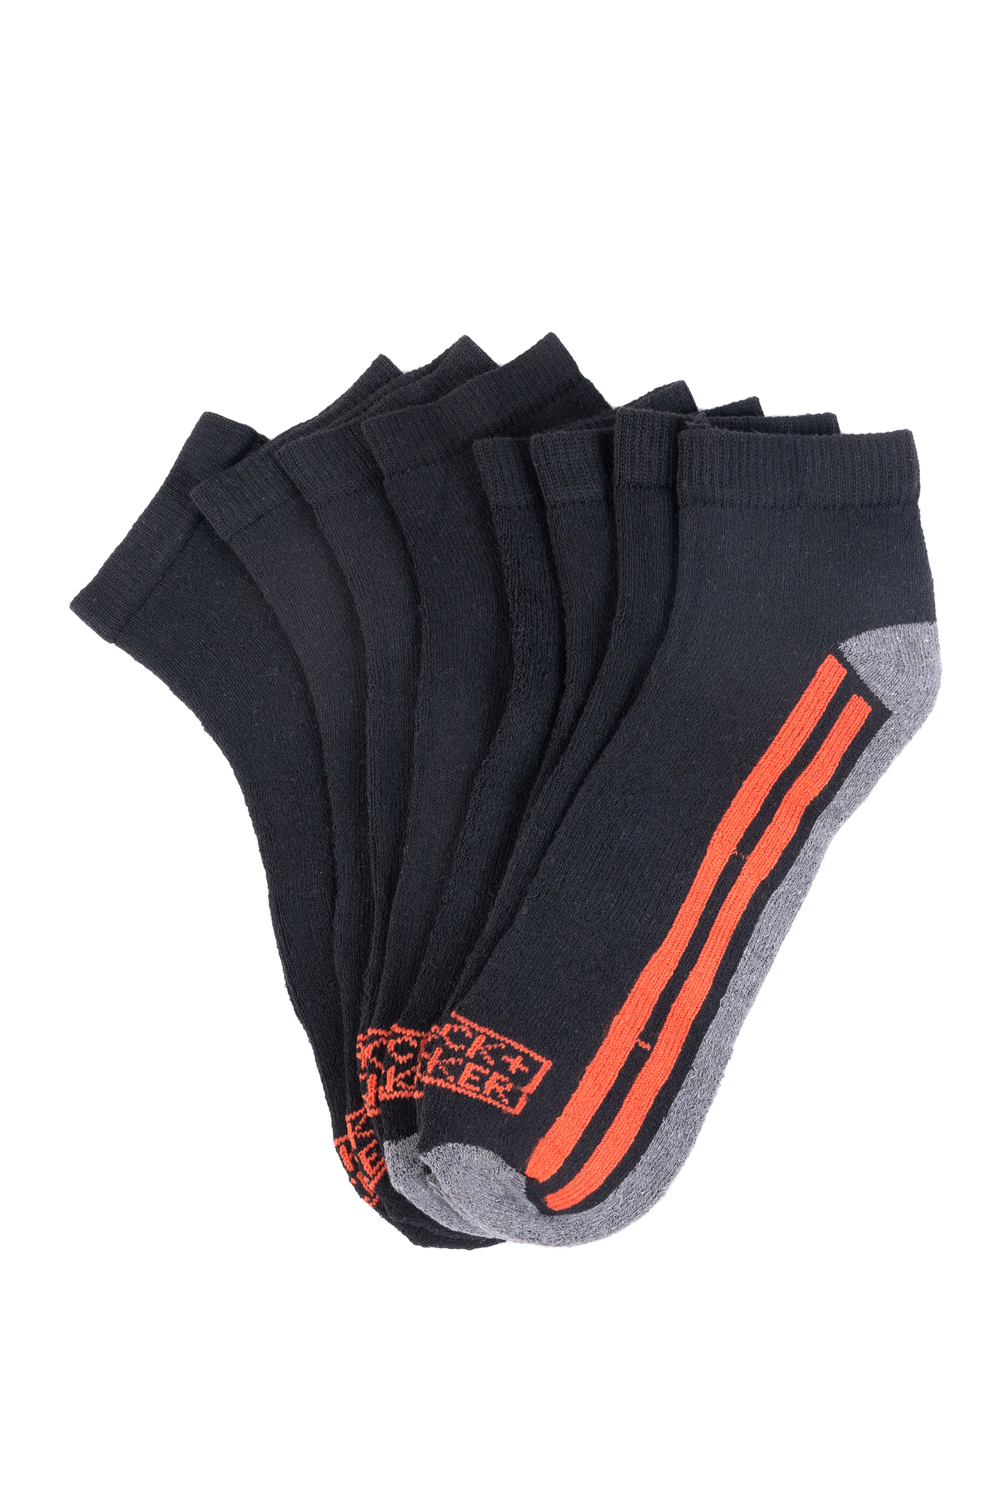 Black & Decker - Men's quarter socks, 4 pairs. Colour: black. Size: 10-13